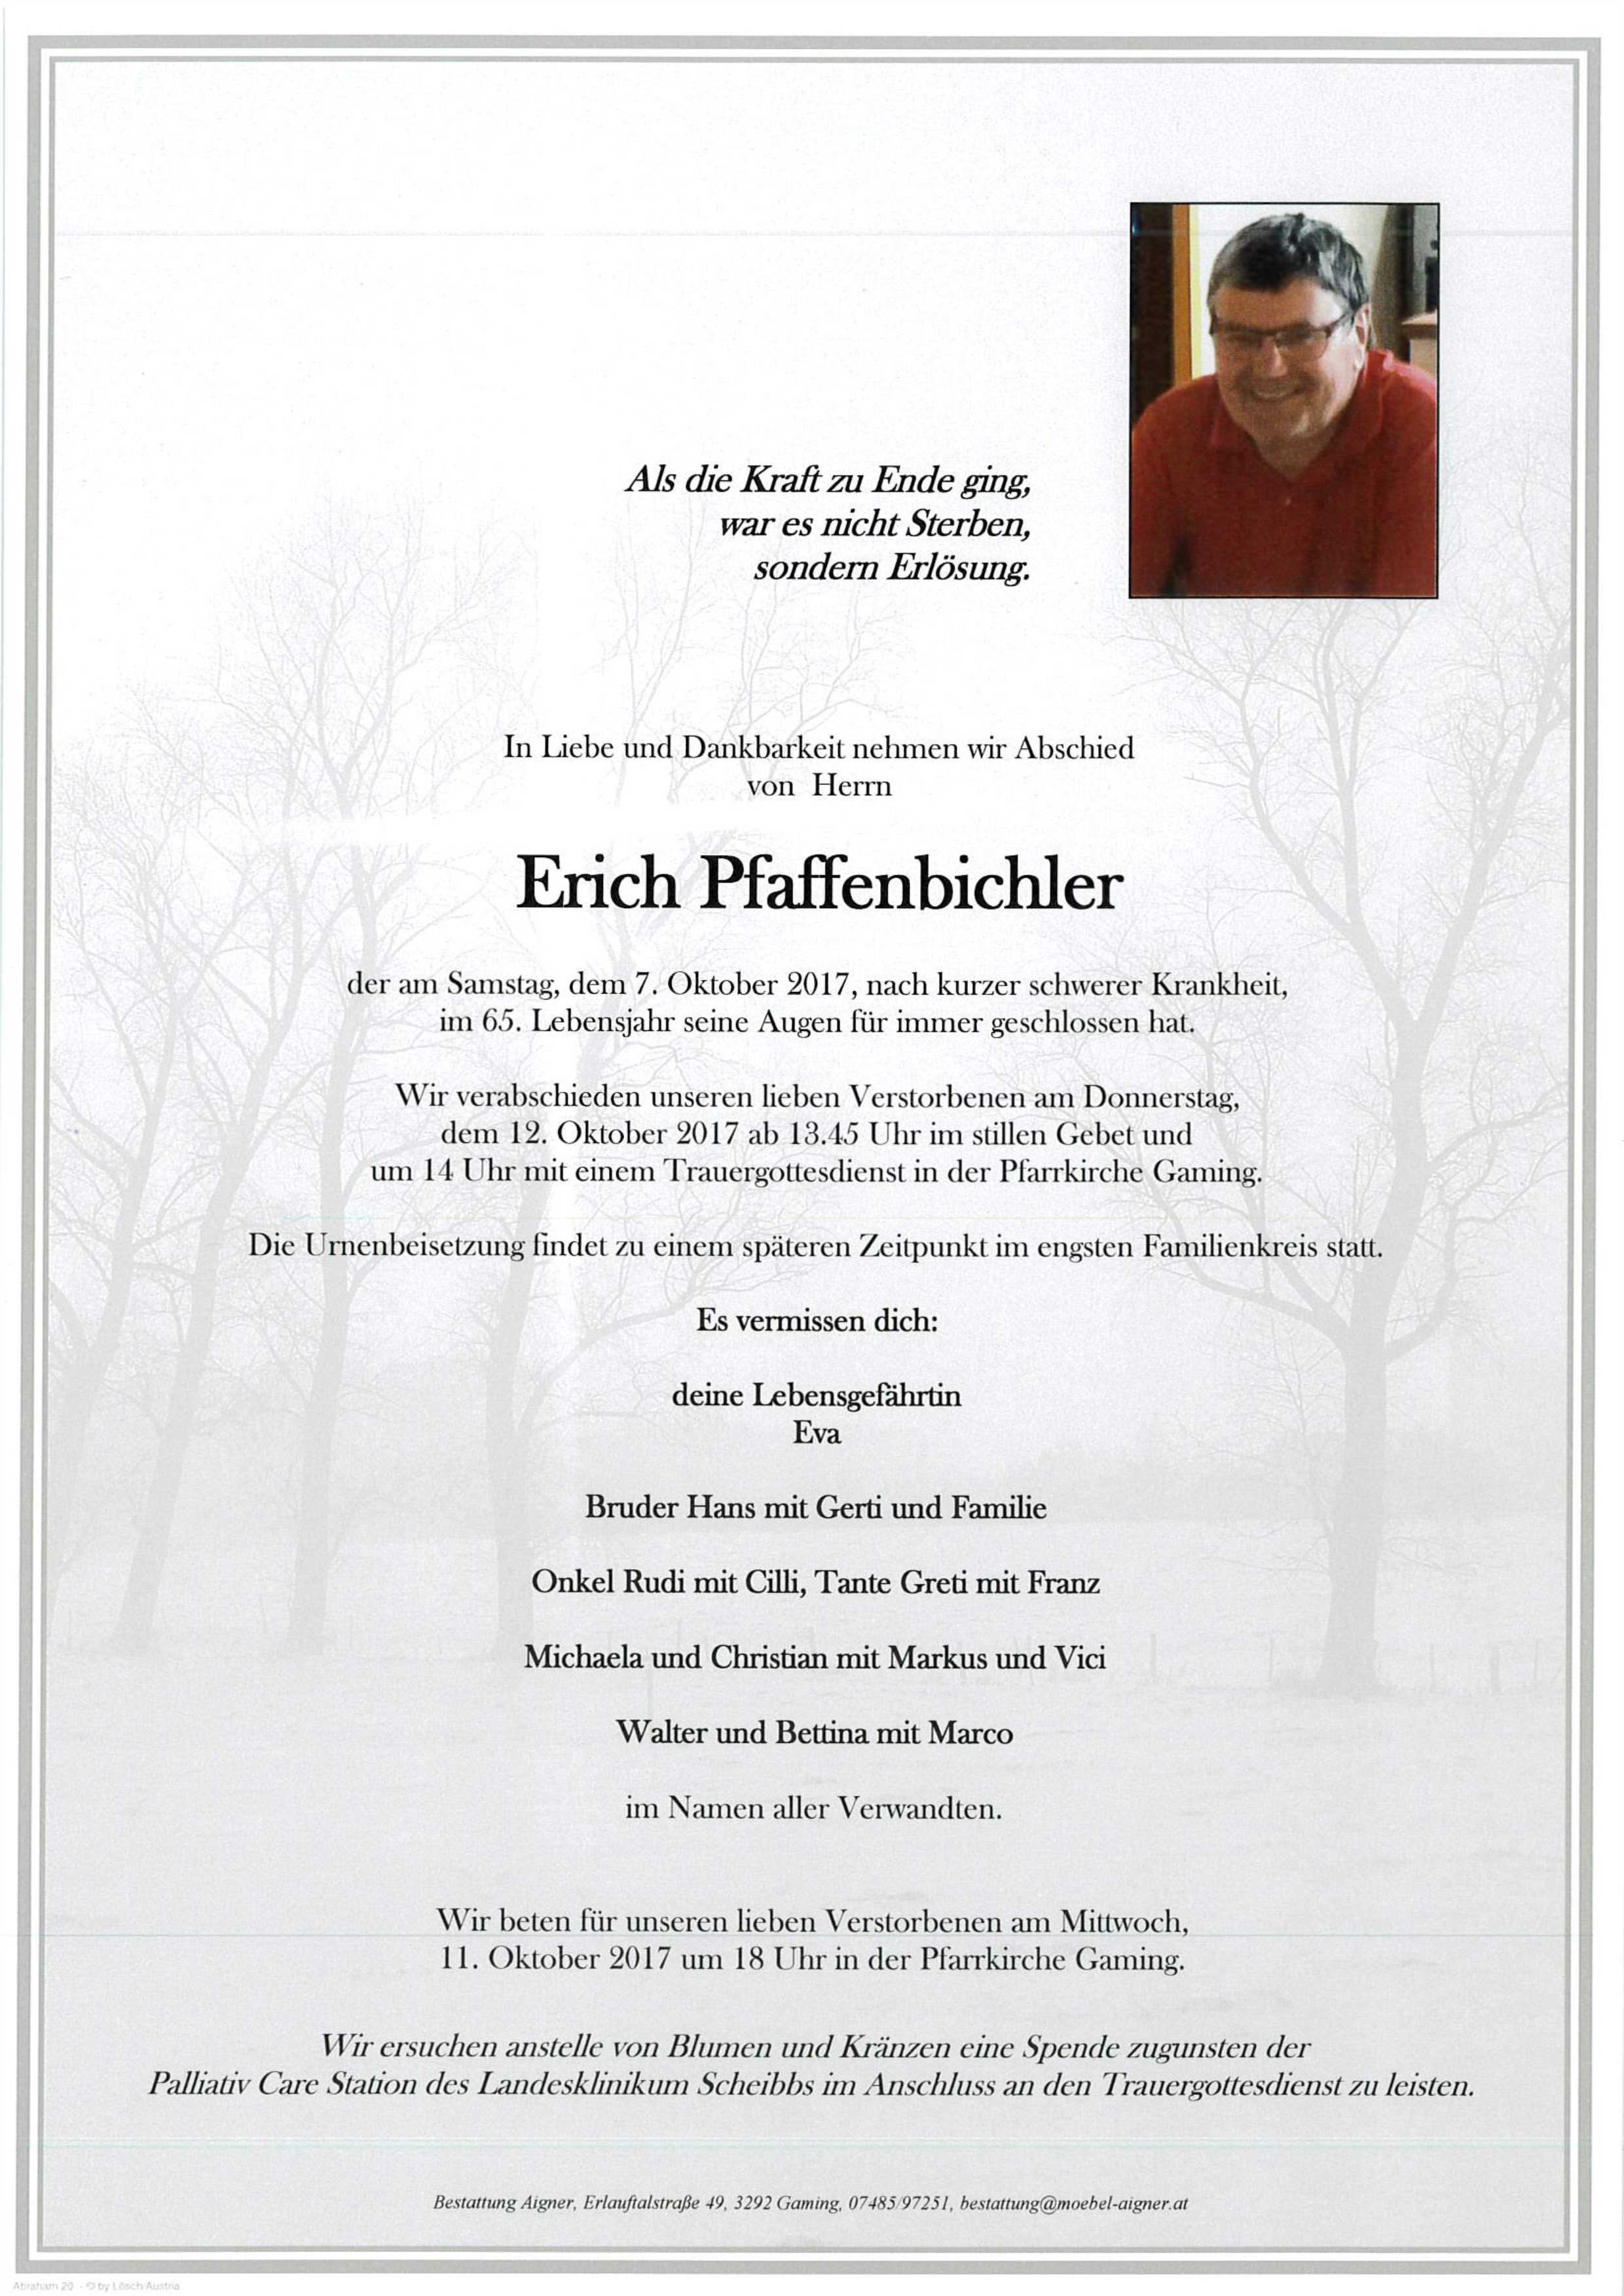 Erich Pfaffenbichler